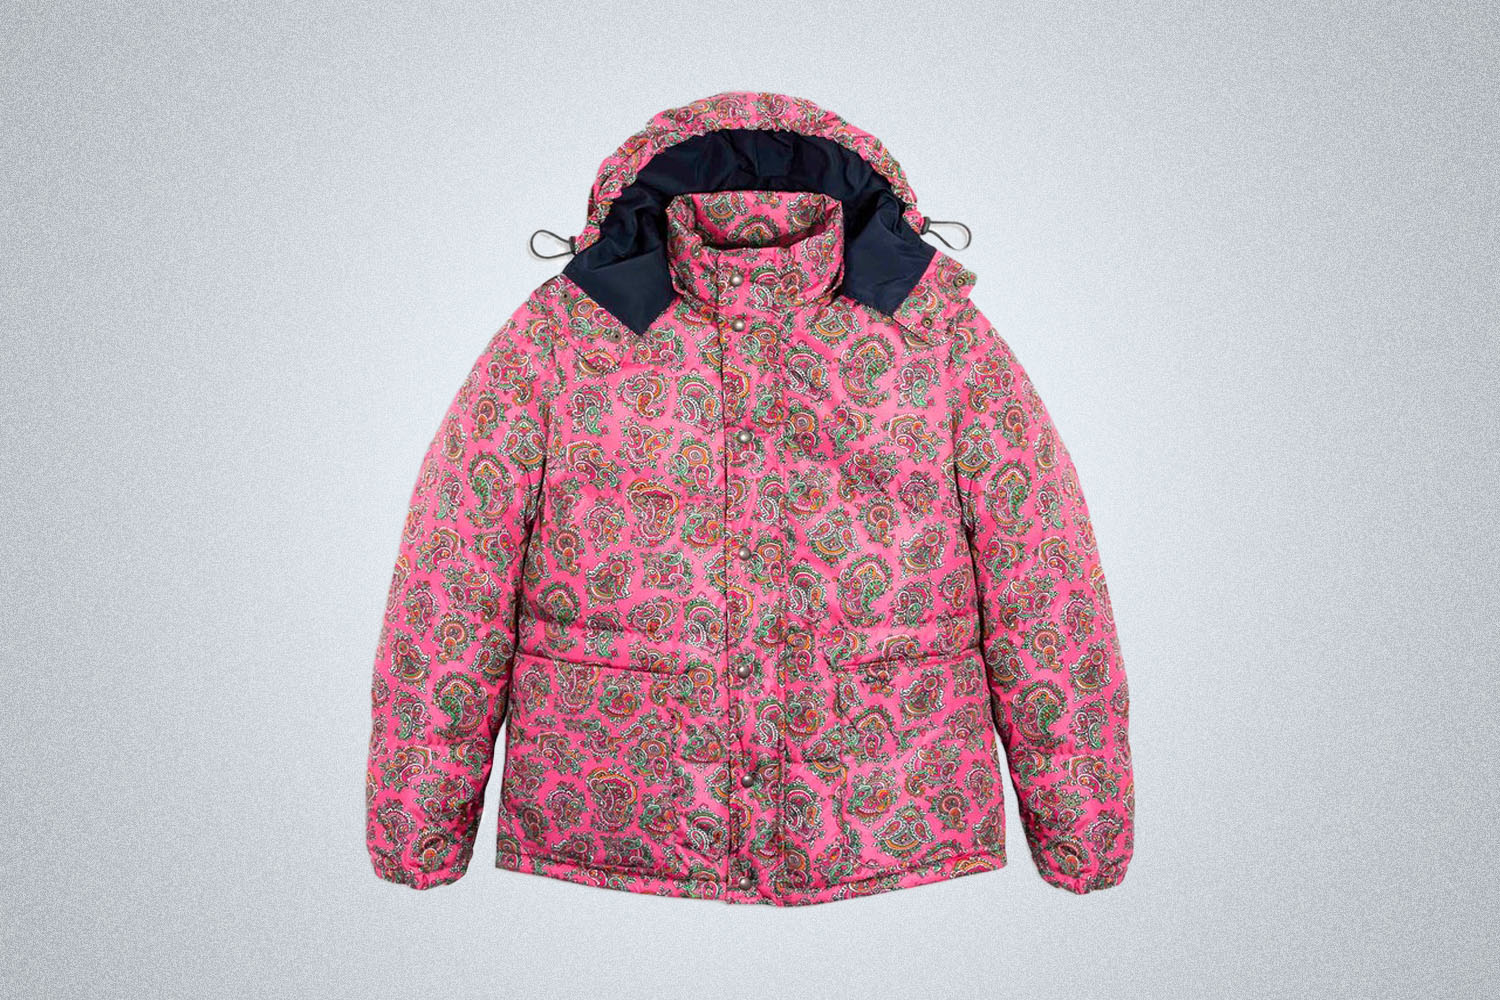 a paisley pink puffer jacket